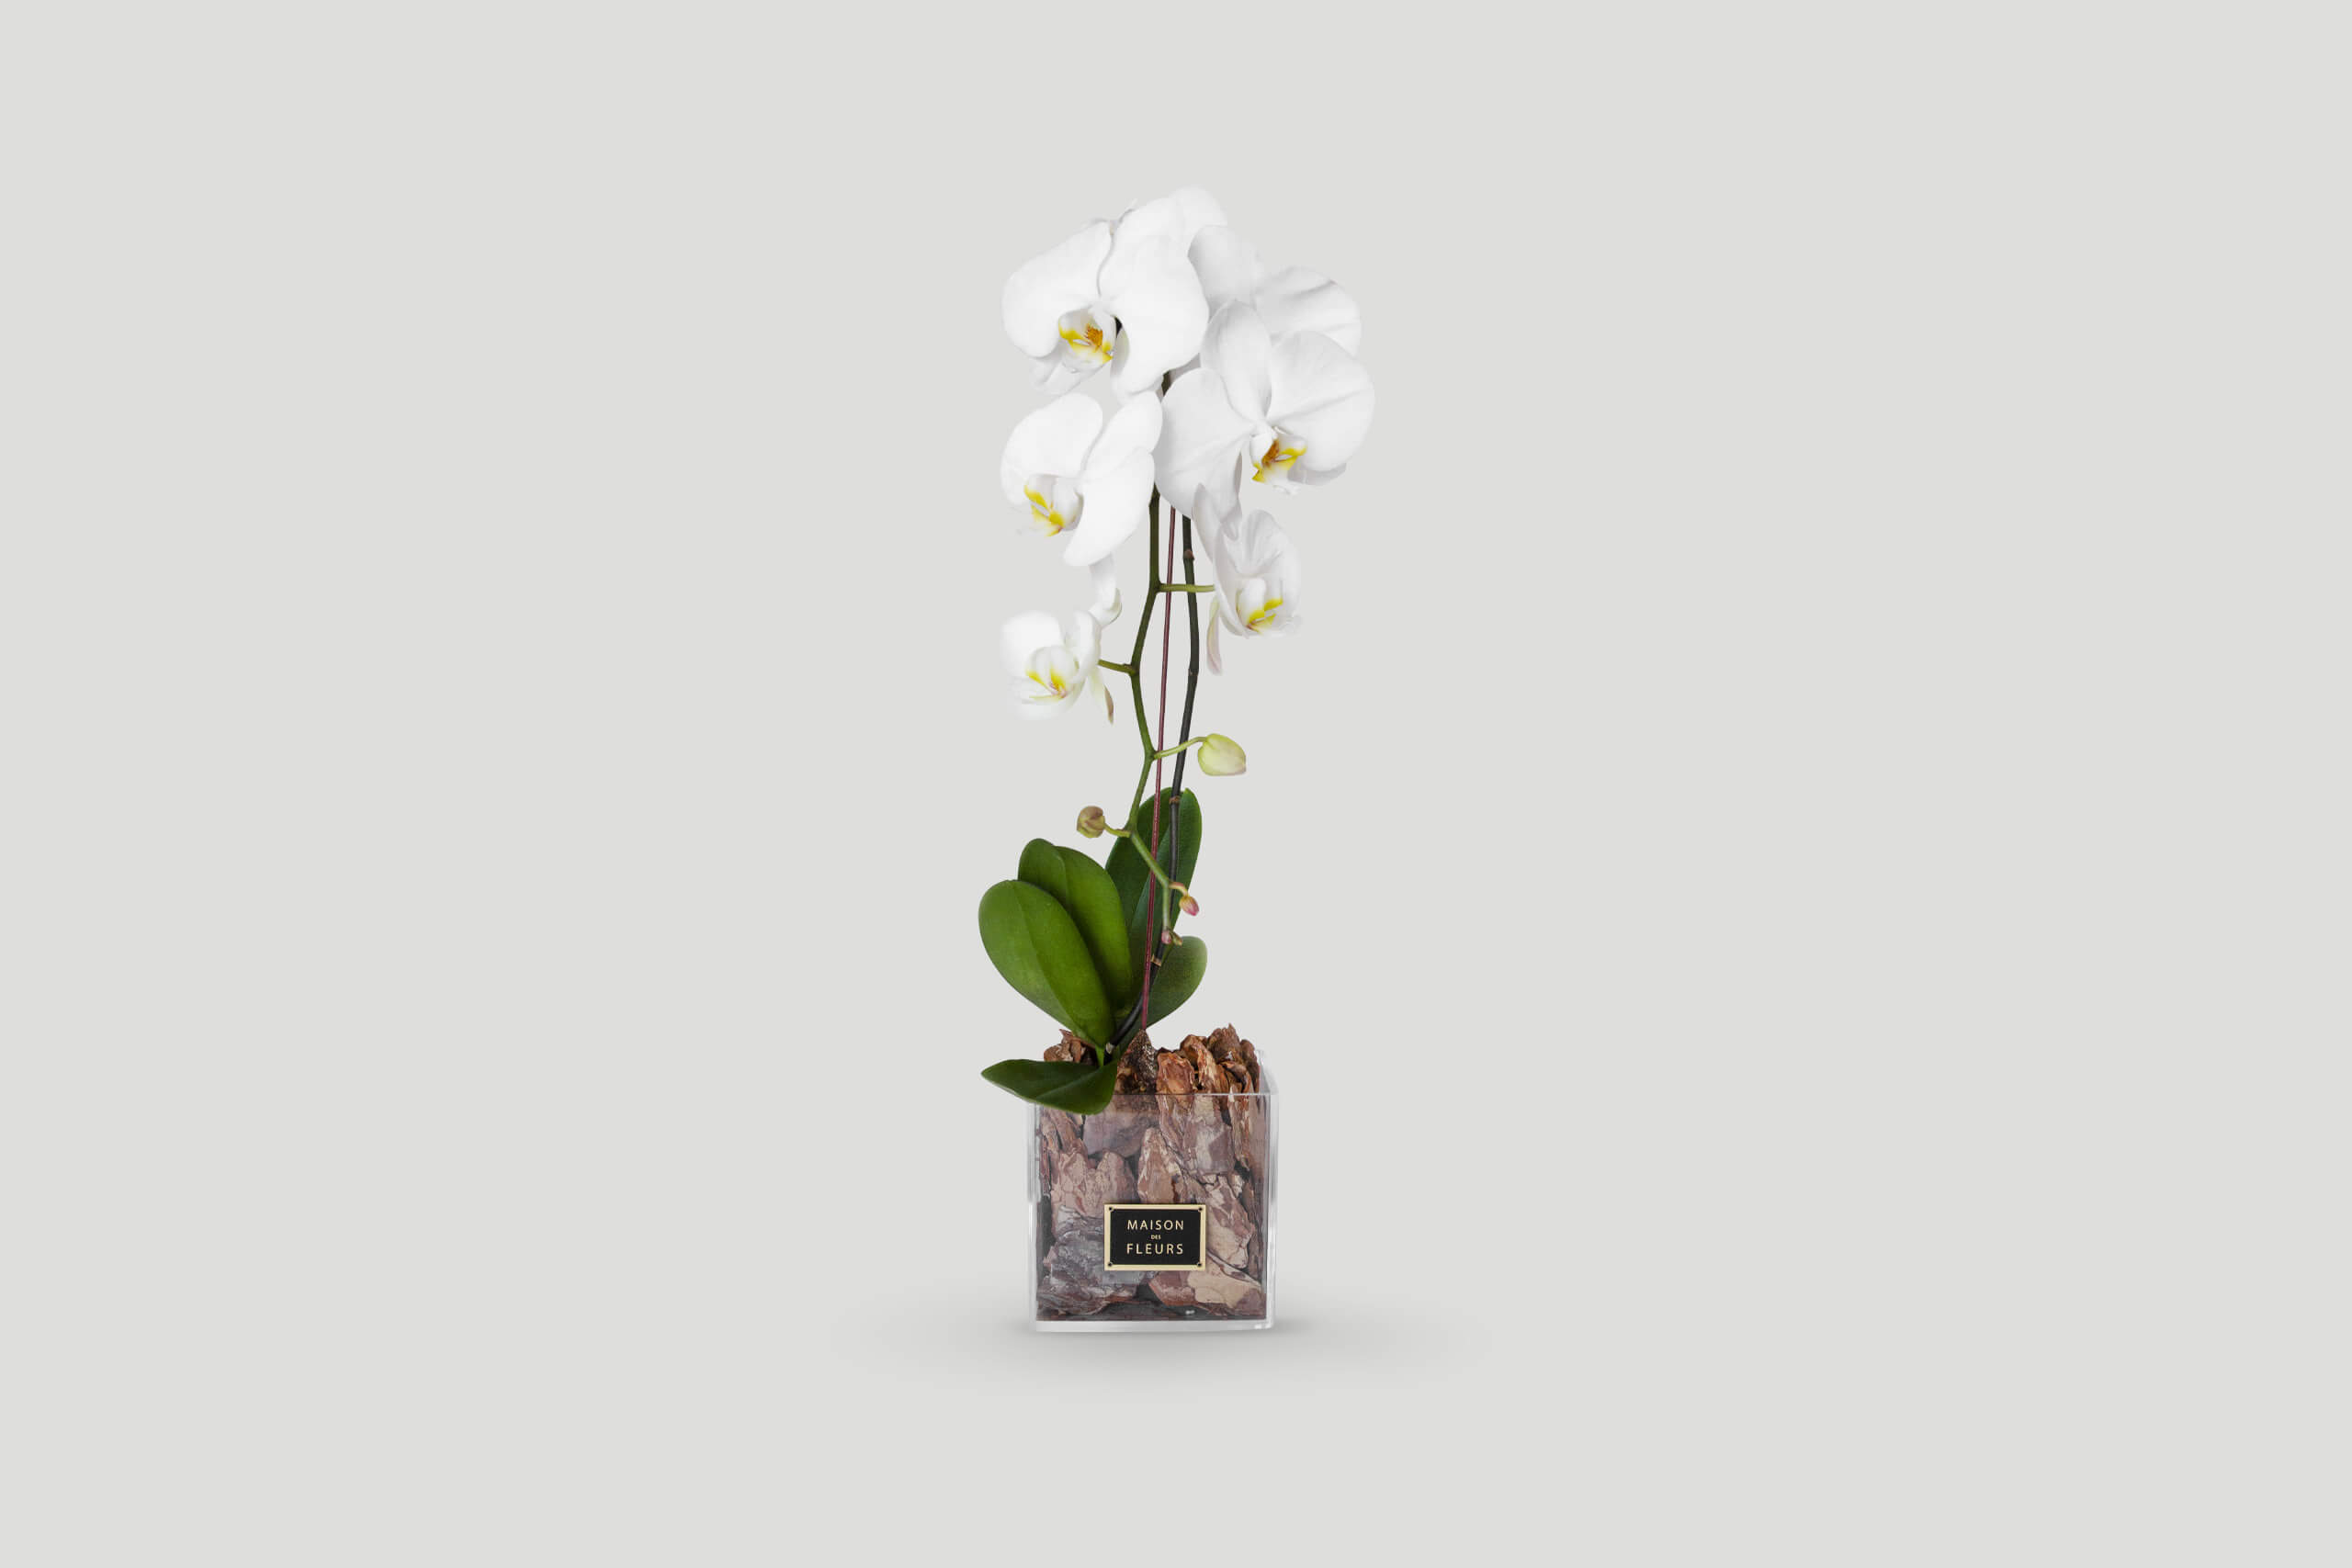 Midnight Moon - Buy Orchids Online at Maison Des Fleurs